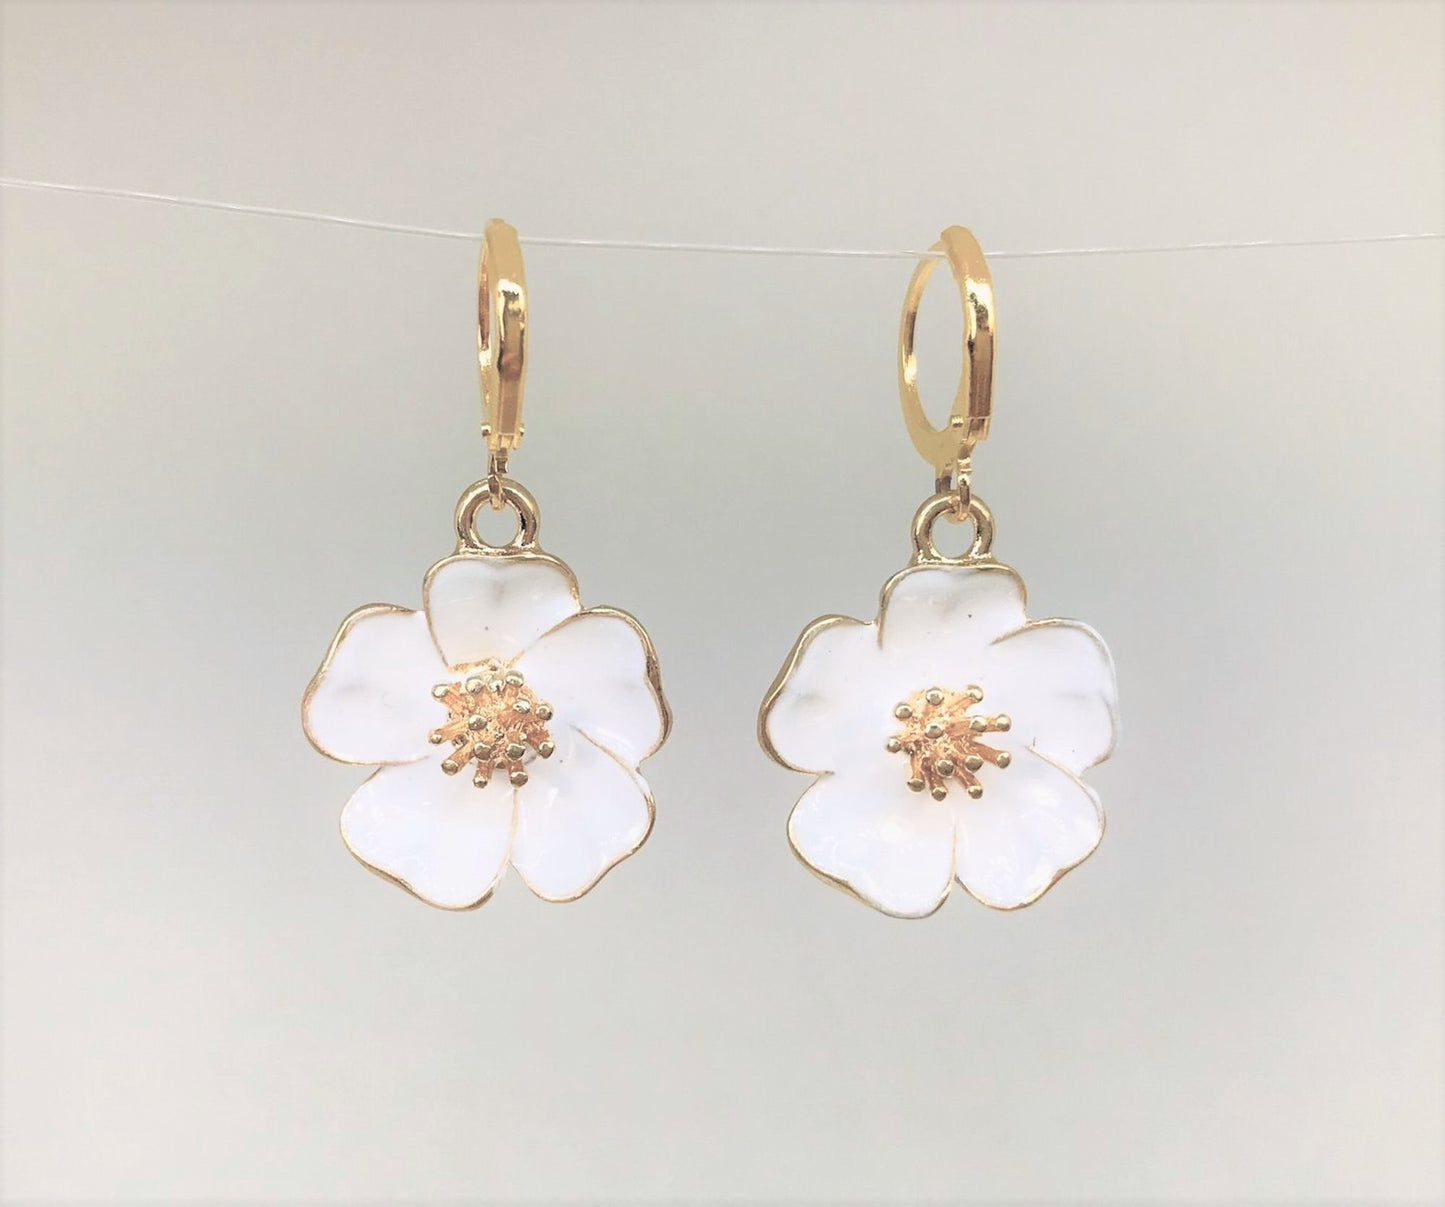 Wholesale Sakura Flower Leverback Earrings